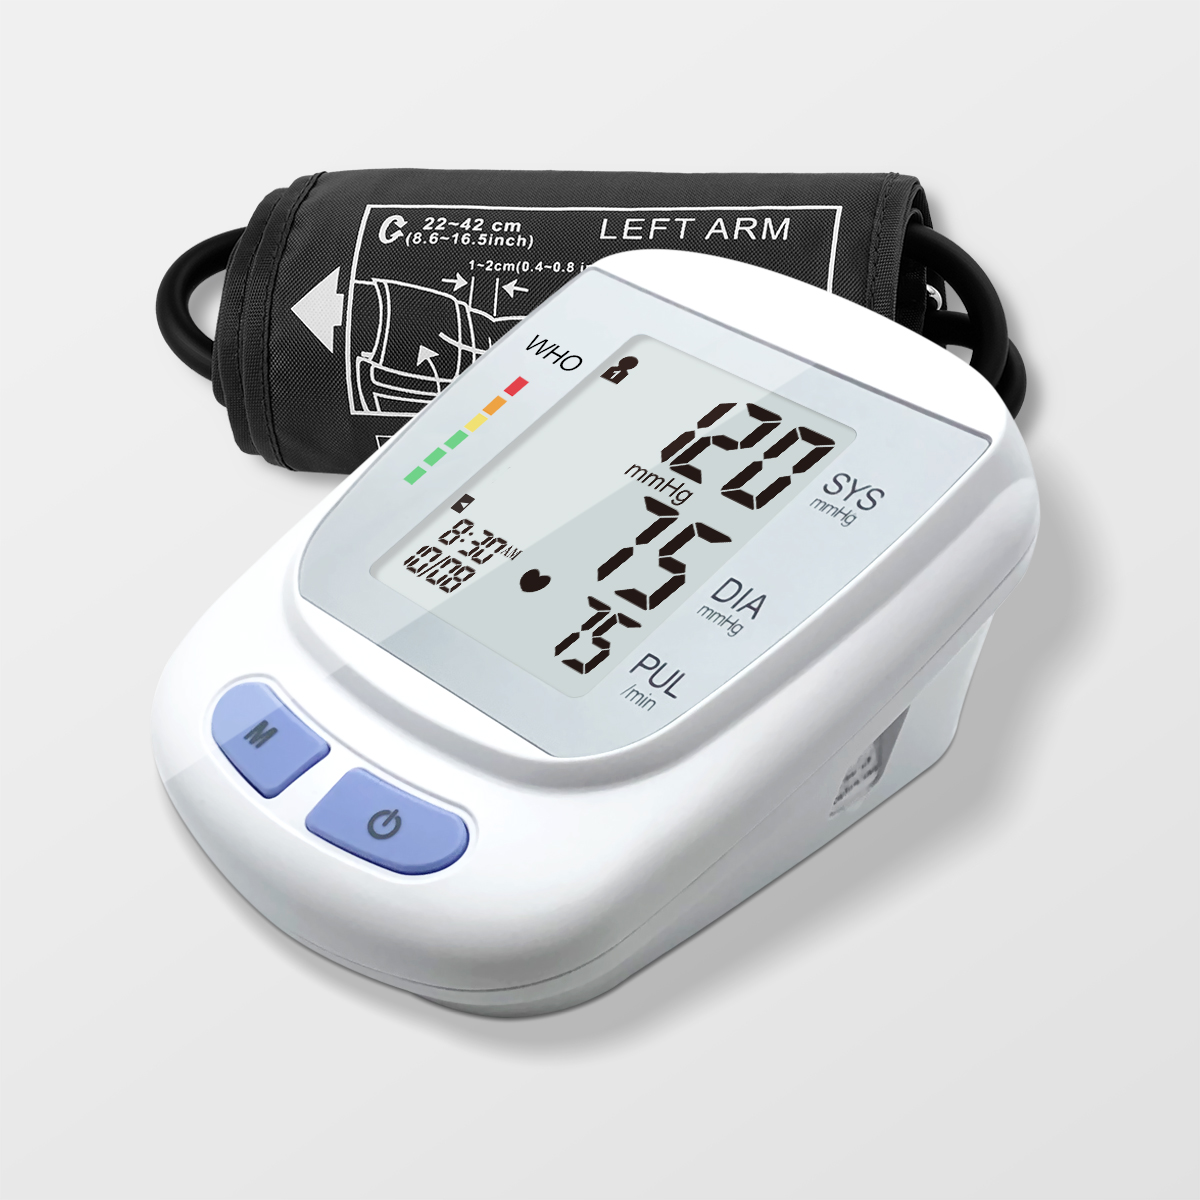 Inaprubahan ng Canada Health ang Upper Arm Rechargeable Blood Pressure Monitor Digital Tensiometro